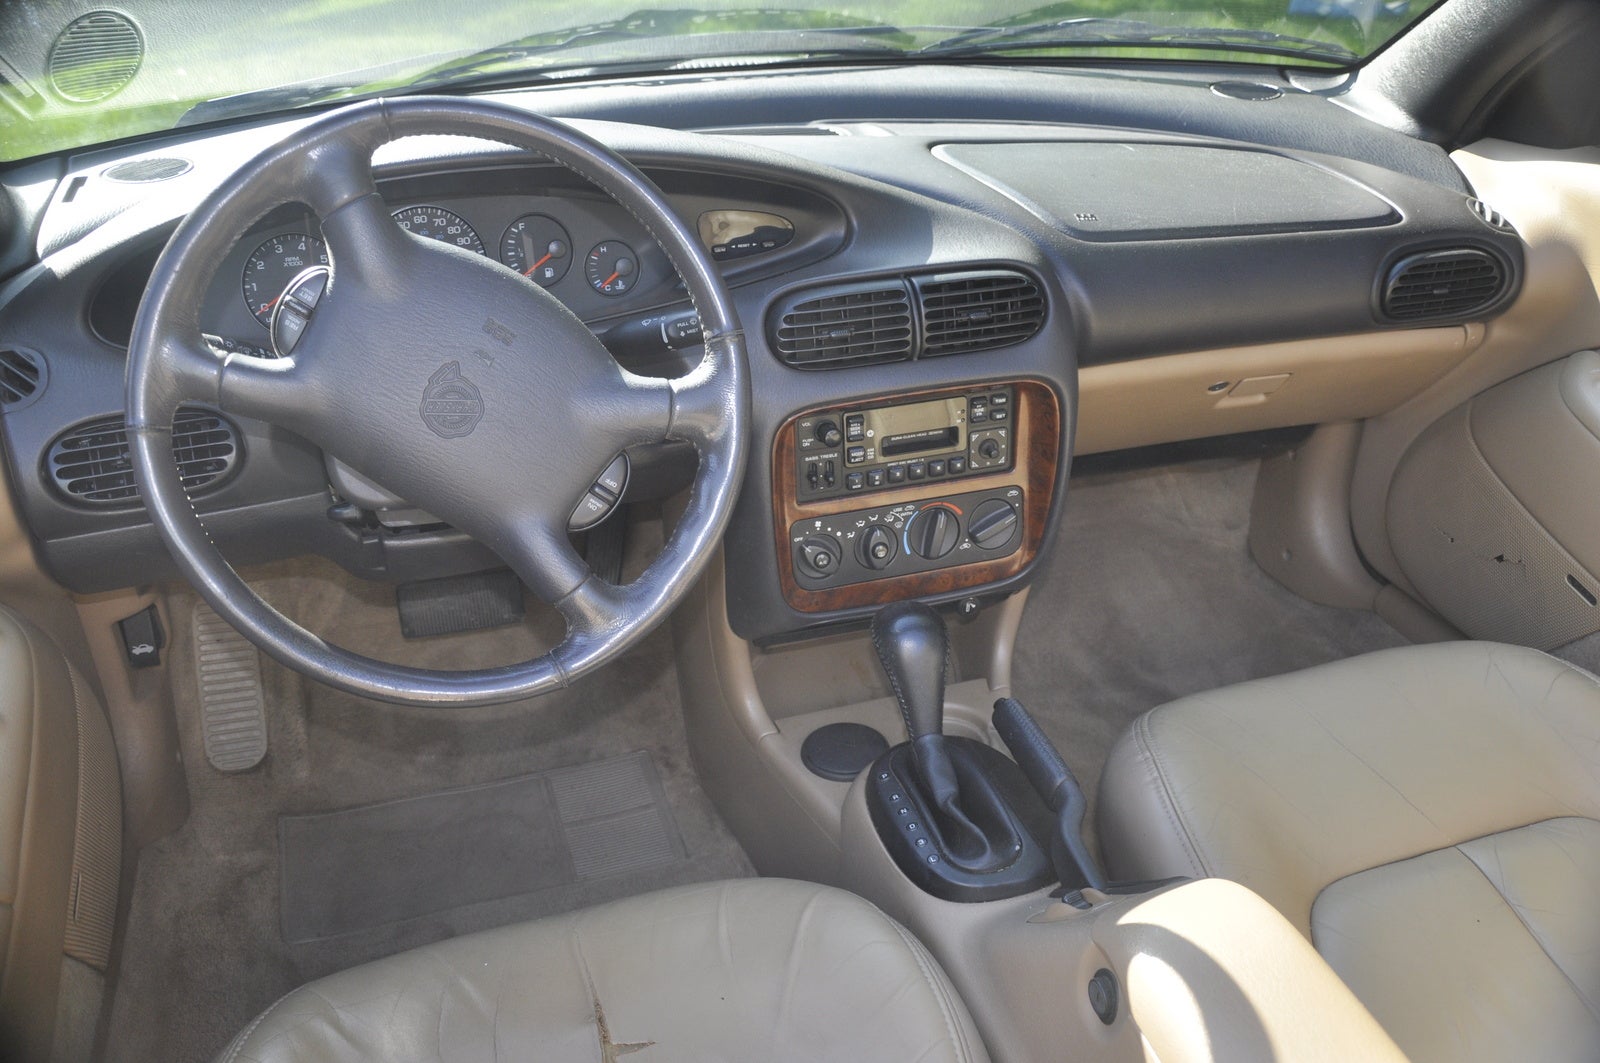 1999 Chrysler sebring convertible interior